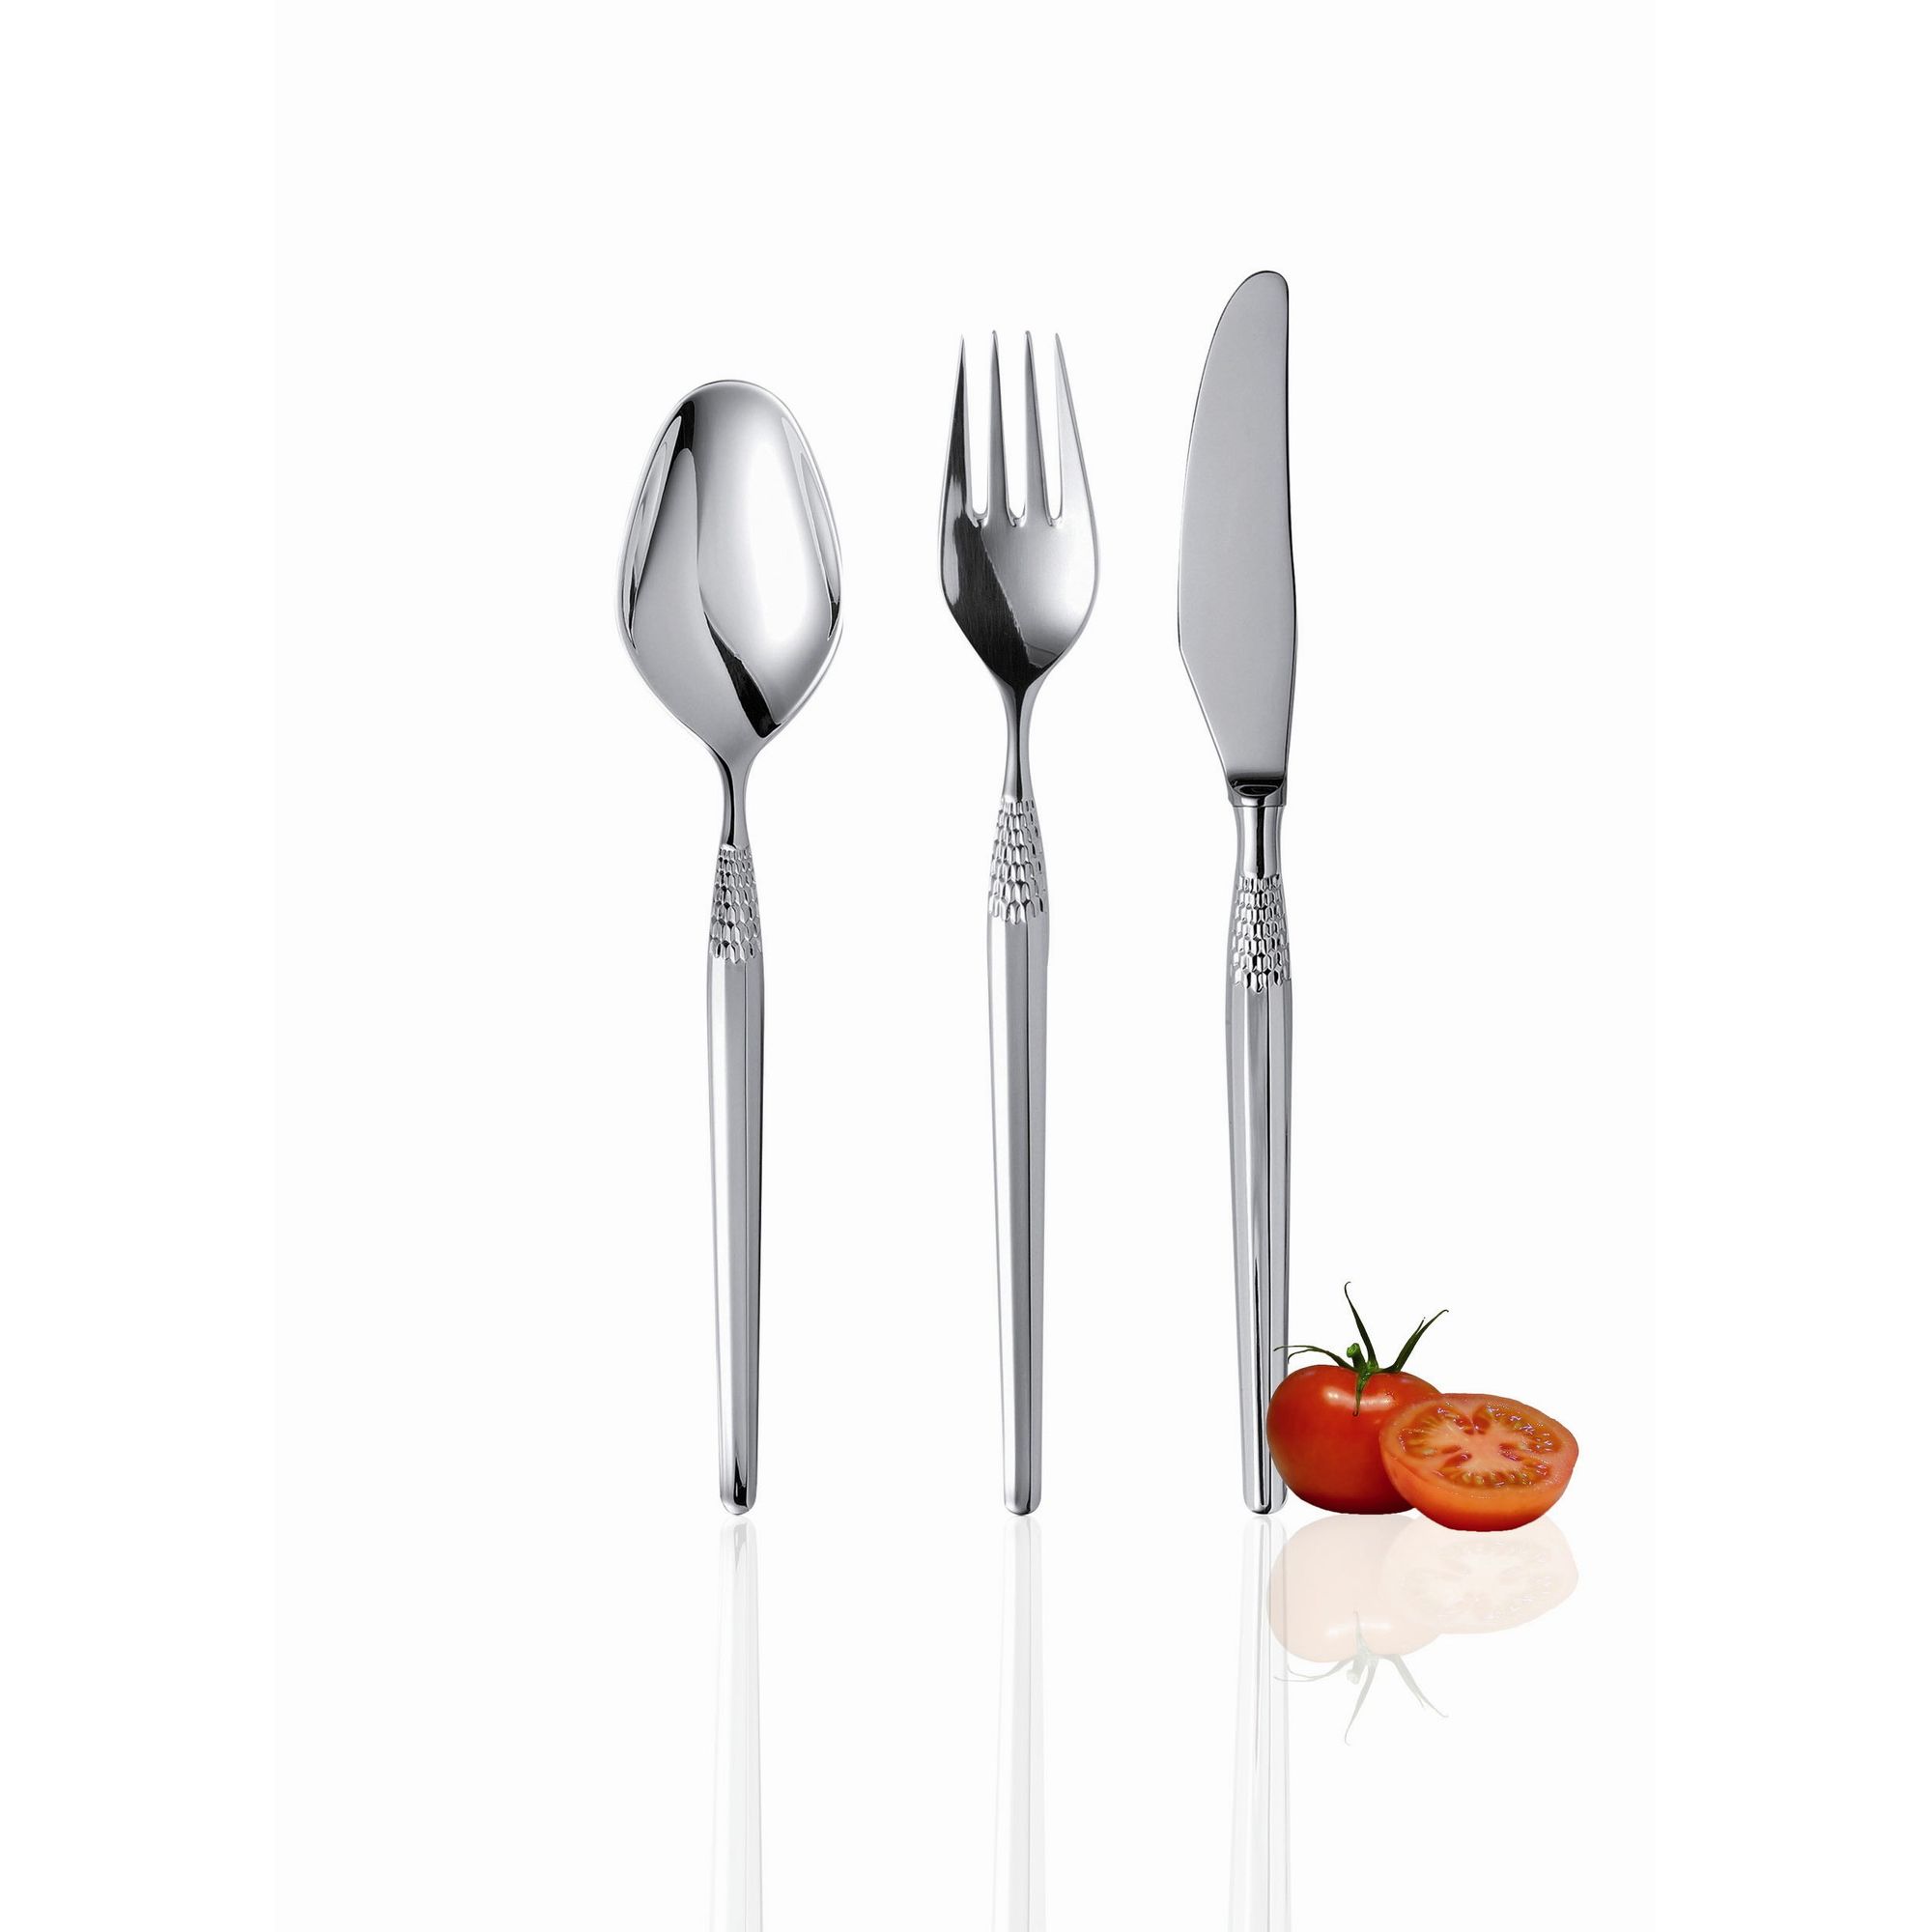 Mema/GAB Cheri 12 Piece Silver Plated Cutlery Set 2 at Tesco Direct